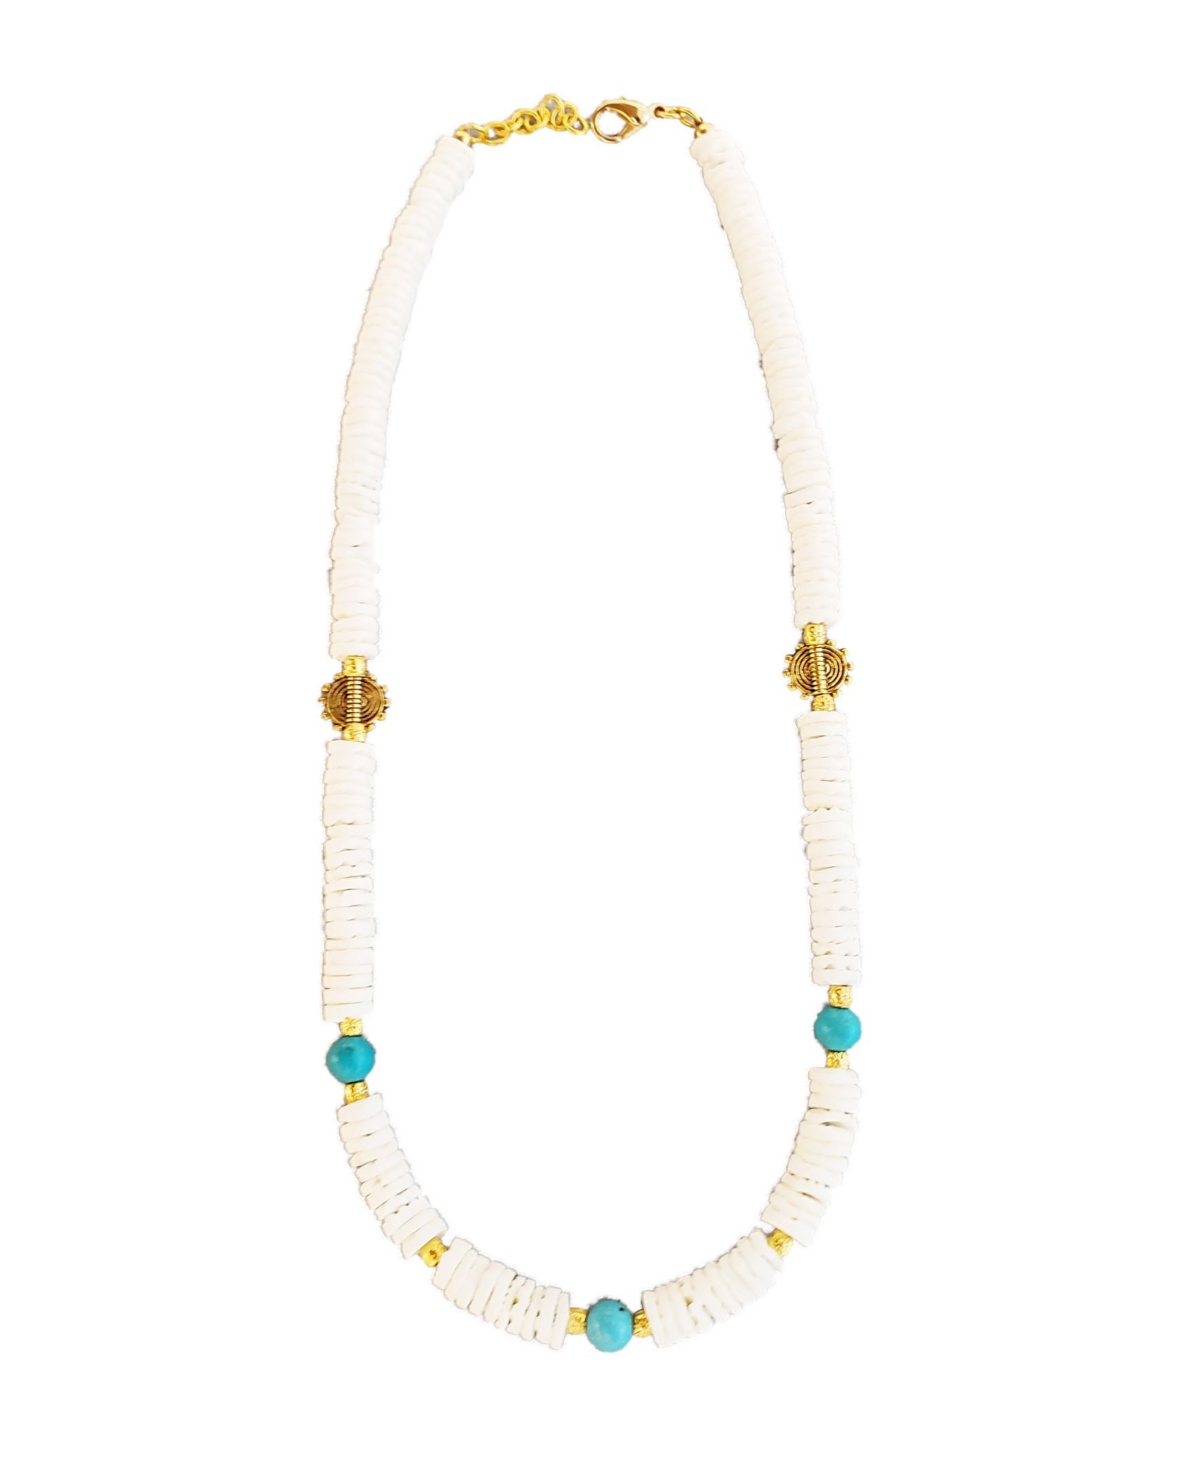 Porus Necklace with Faux Turquiose Stone - Gold-Tone, White, Turquoise